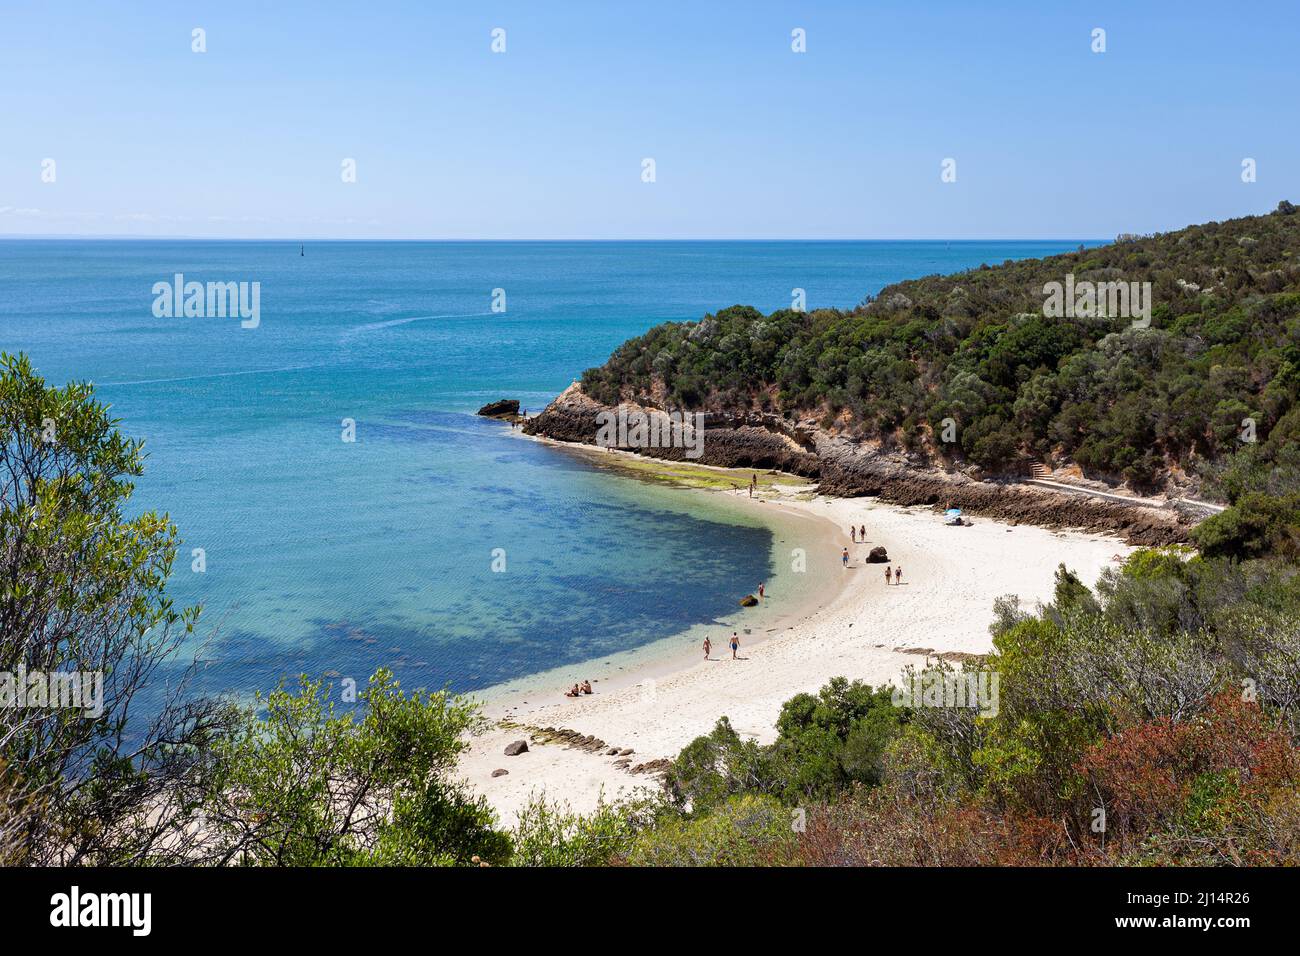 The beautiful Praia de Galapinhos, a remote beach located in the Parque Natural da Arrábida, a natural area south of Lisbon, Portugal Stock Photo